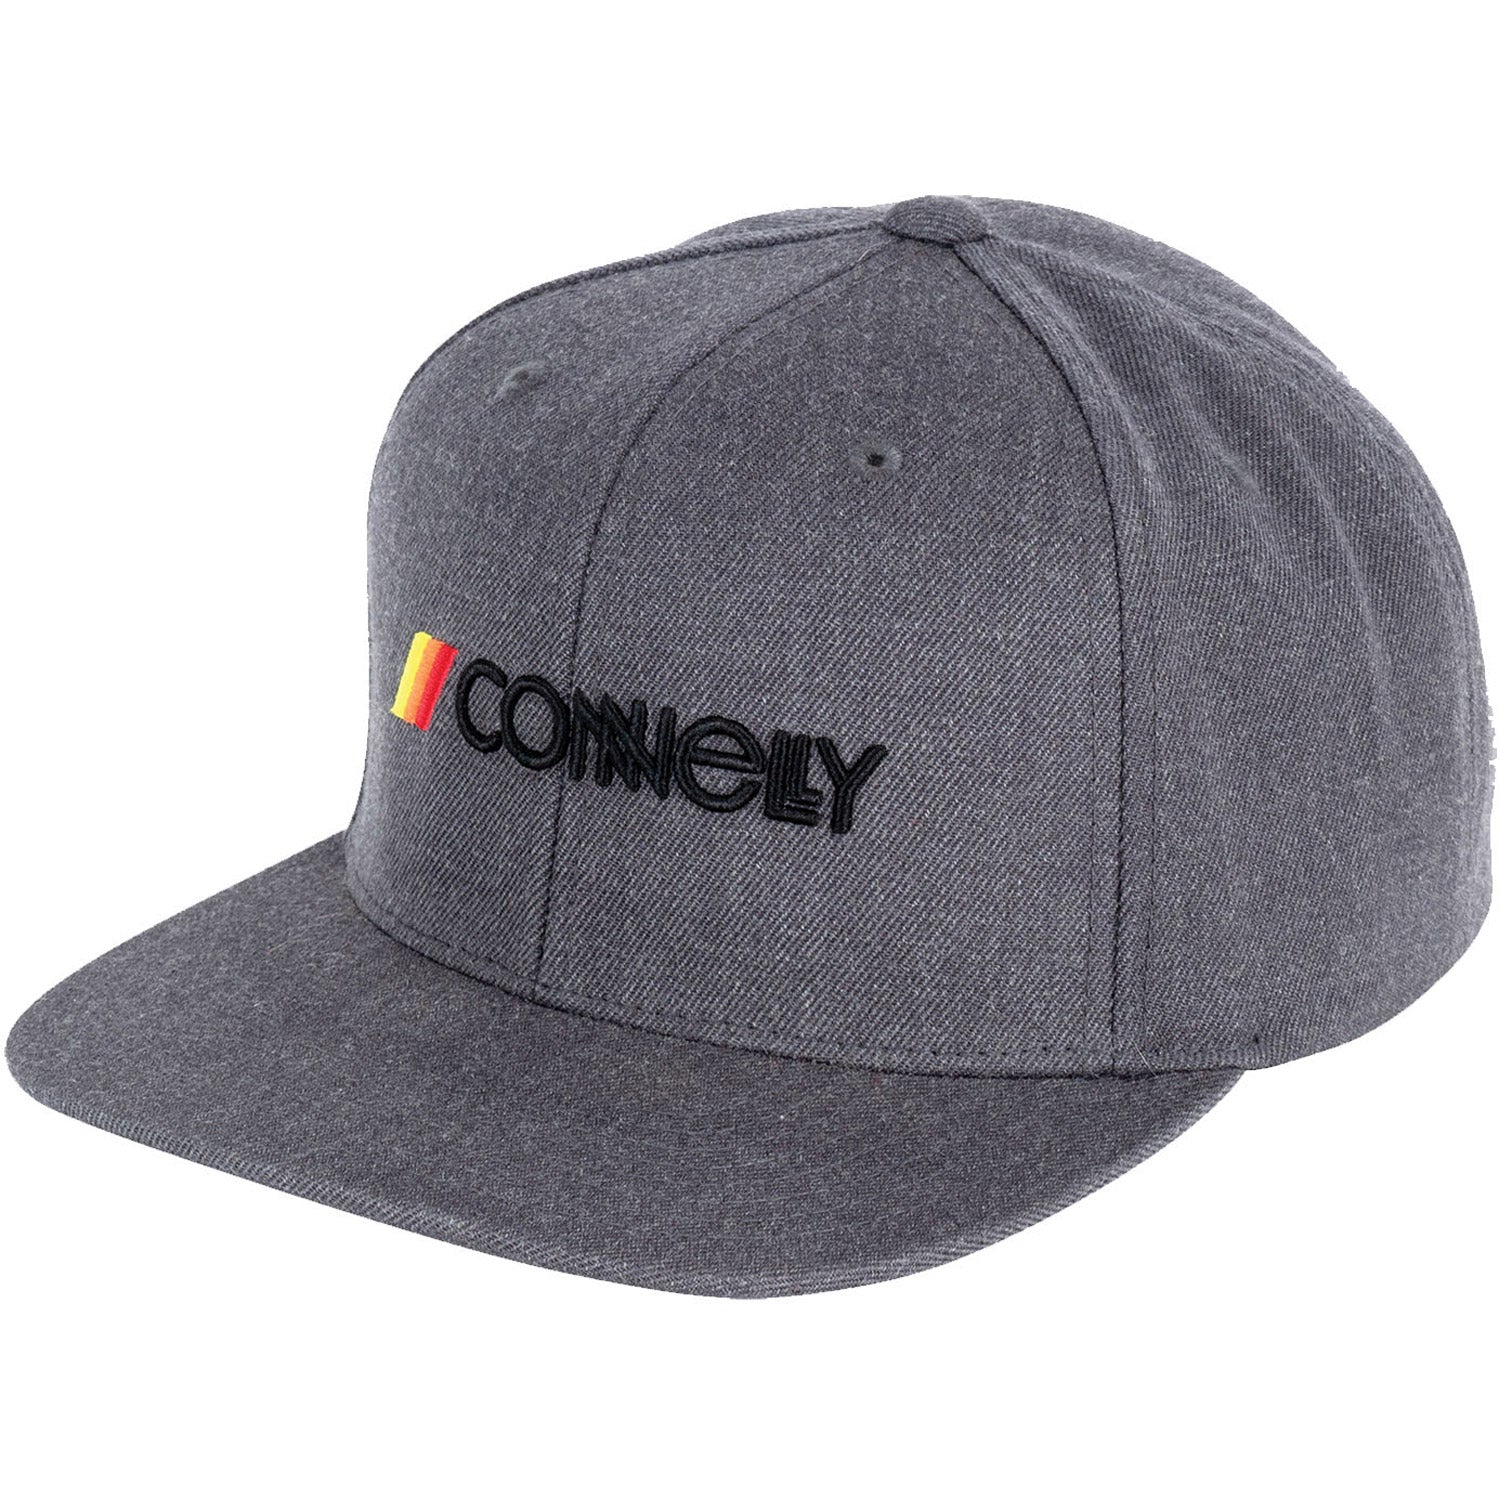 Corporate Hat